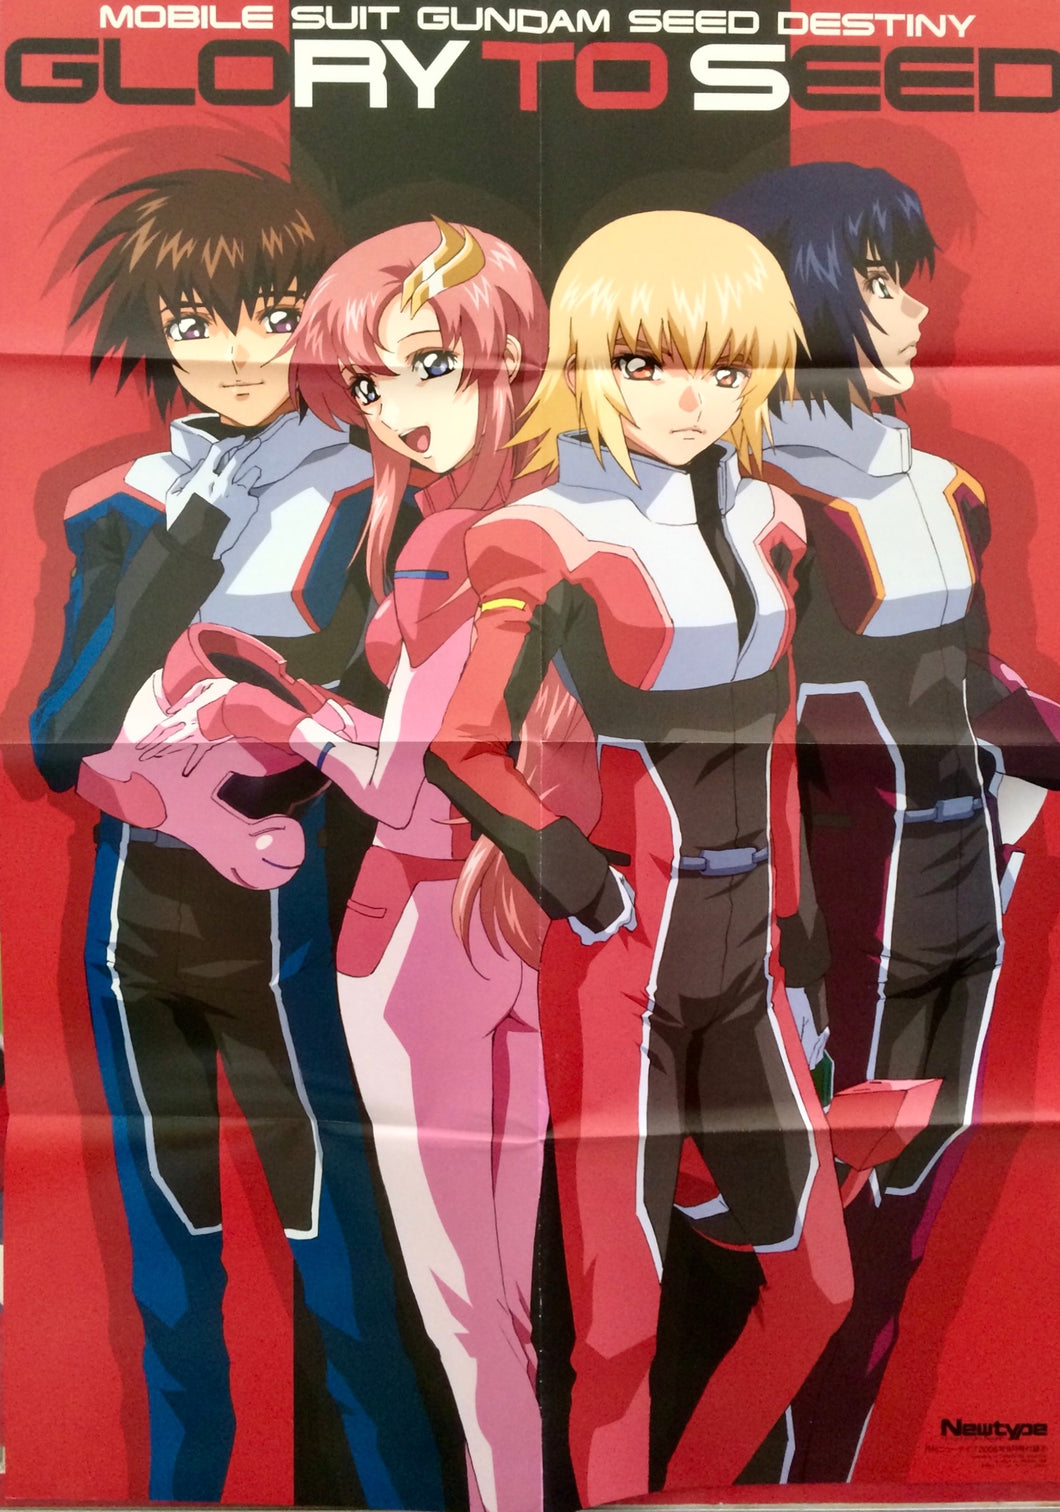 Mobile Suit Gundam SEED Destiny- Kira, Athrun, Lacus & Cagalli - Pilot Suit ver. - B2 Poster - Monthly Newtype Appendix